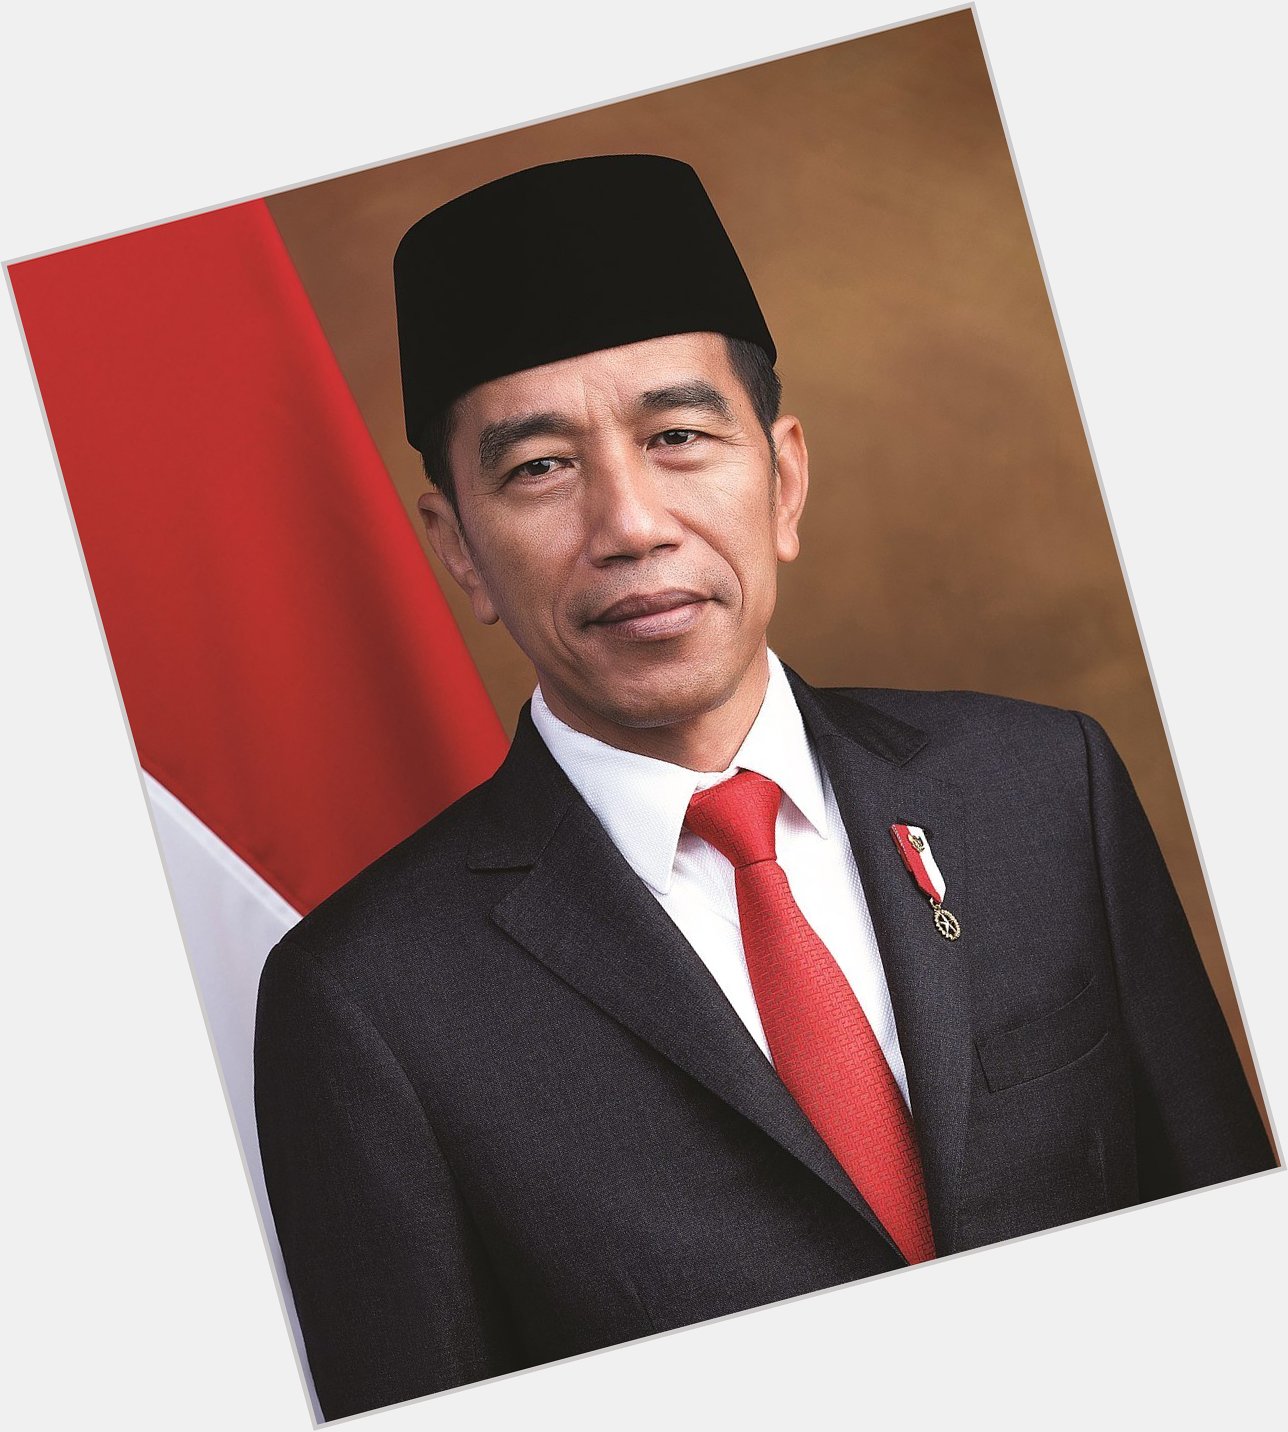 Happy Birthday, Joko Widodo!
The President of Indonesia
Image credit: Wikipedia 